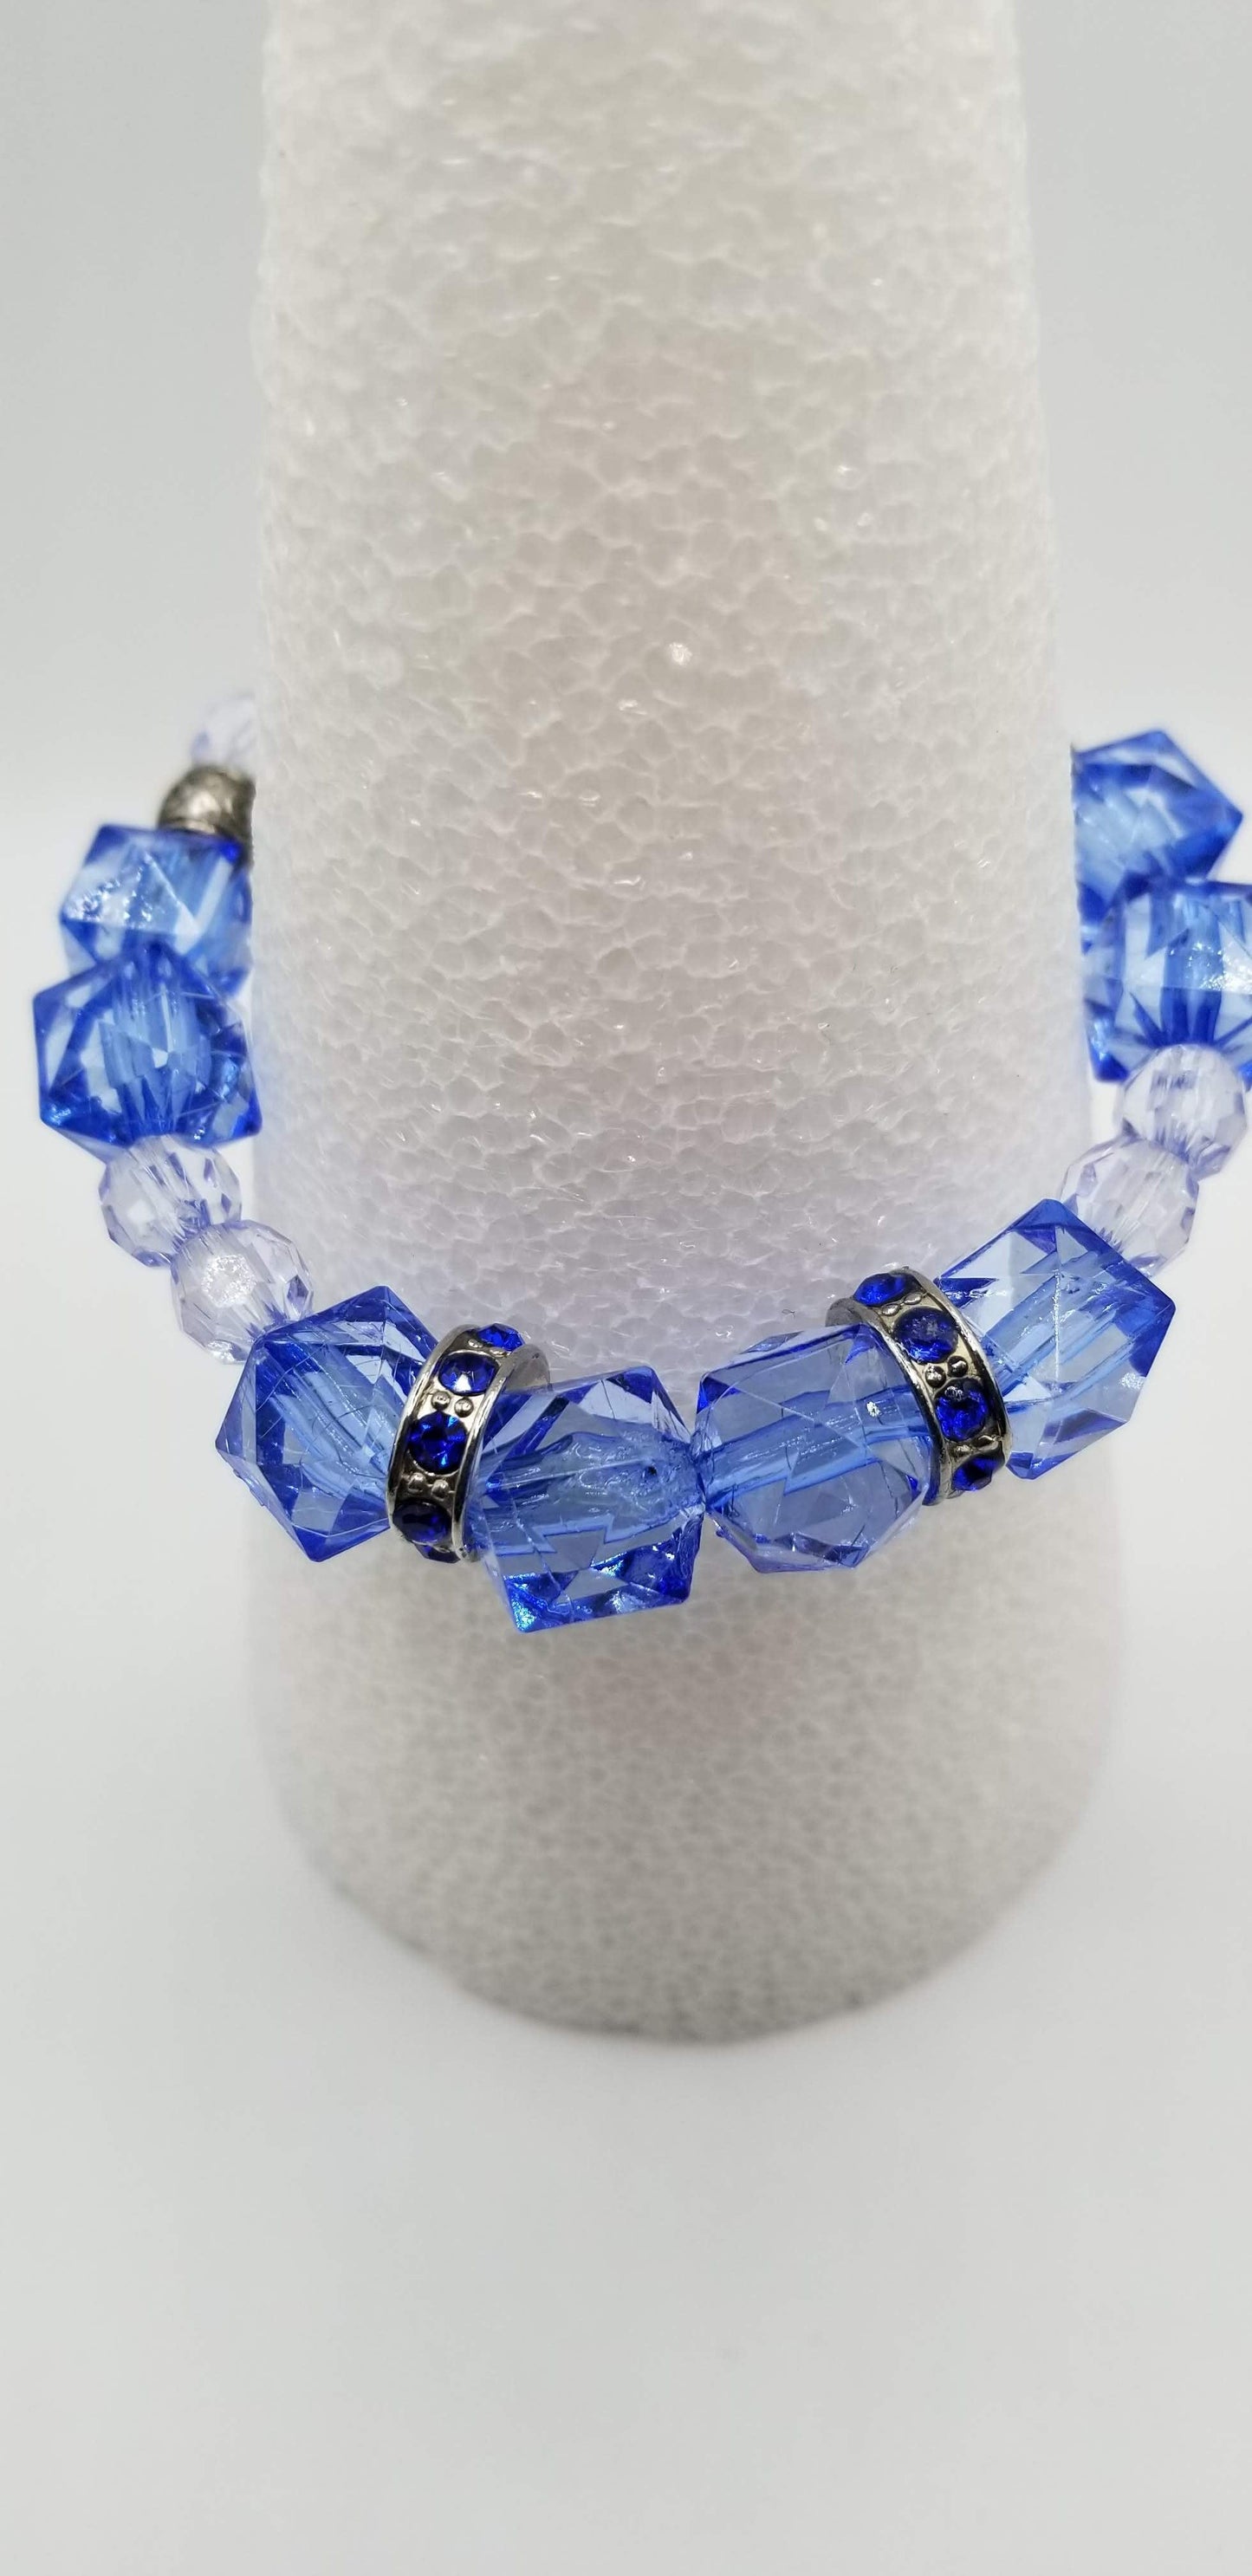 Handcrafted Jewelry By Teri C Inspirational Blue Cross Bracelet